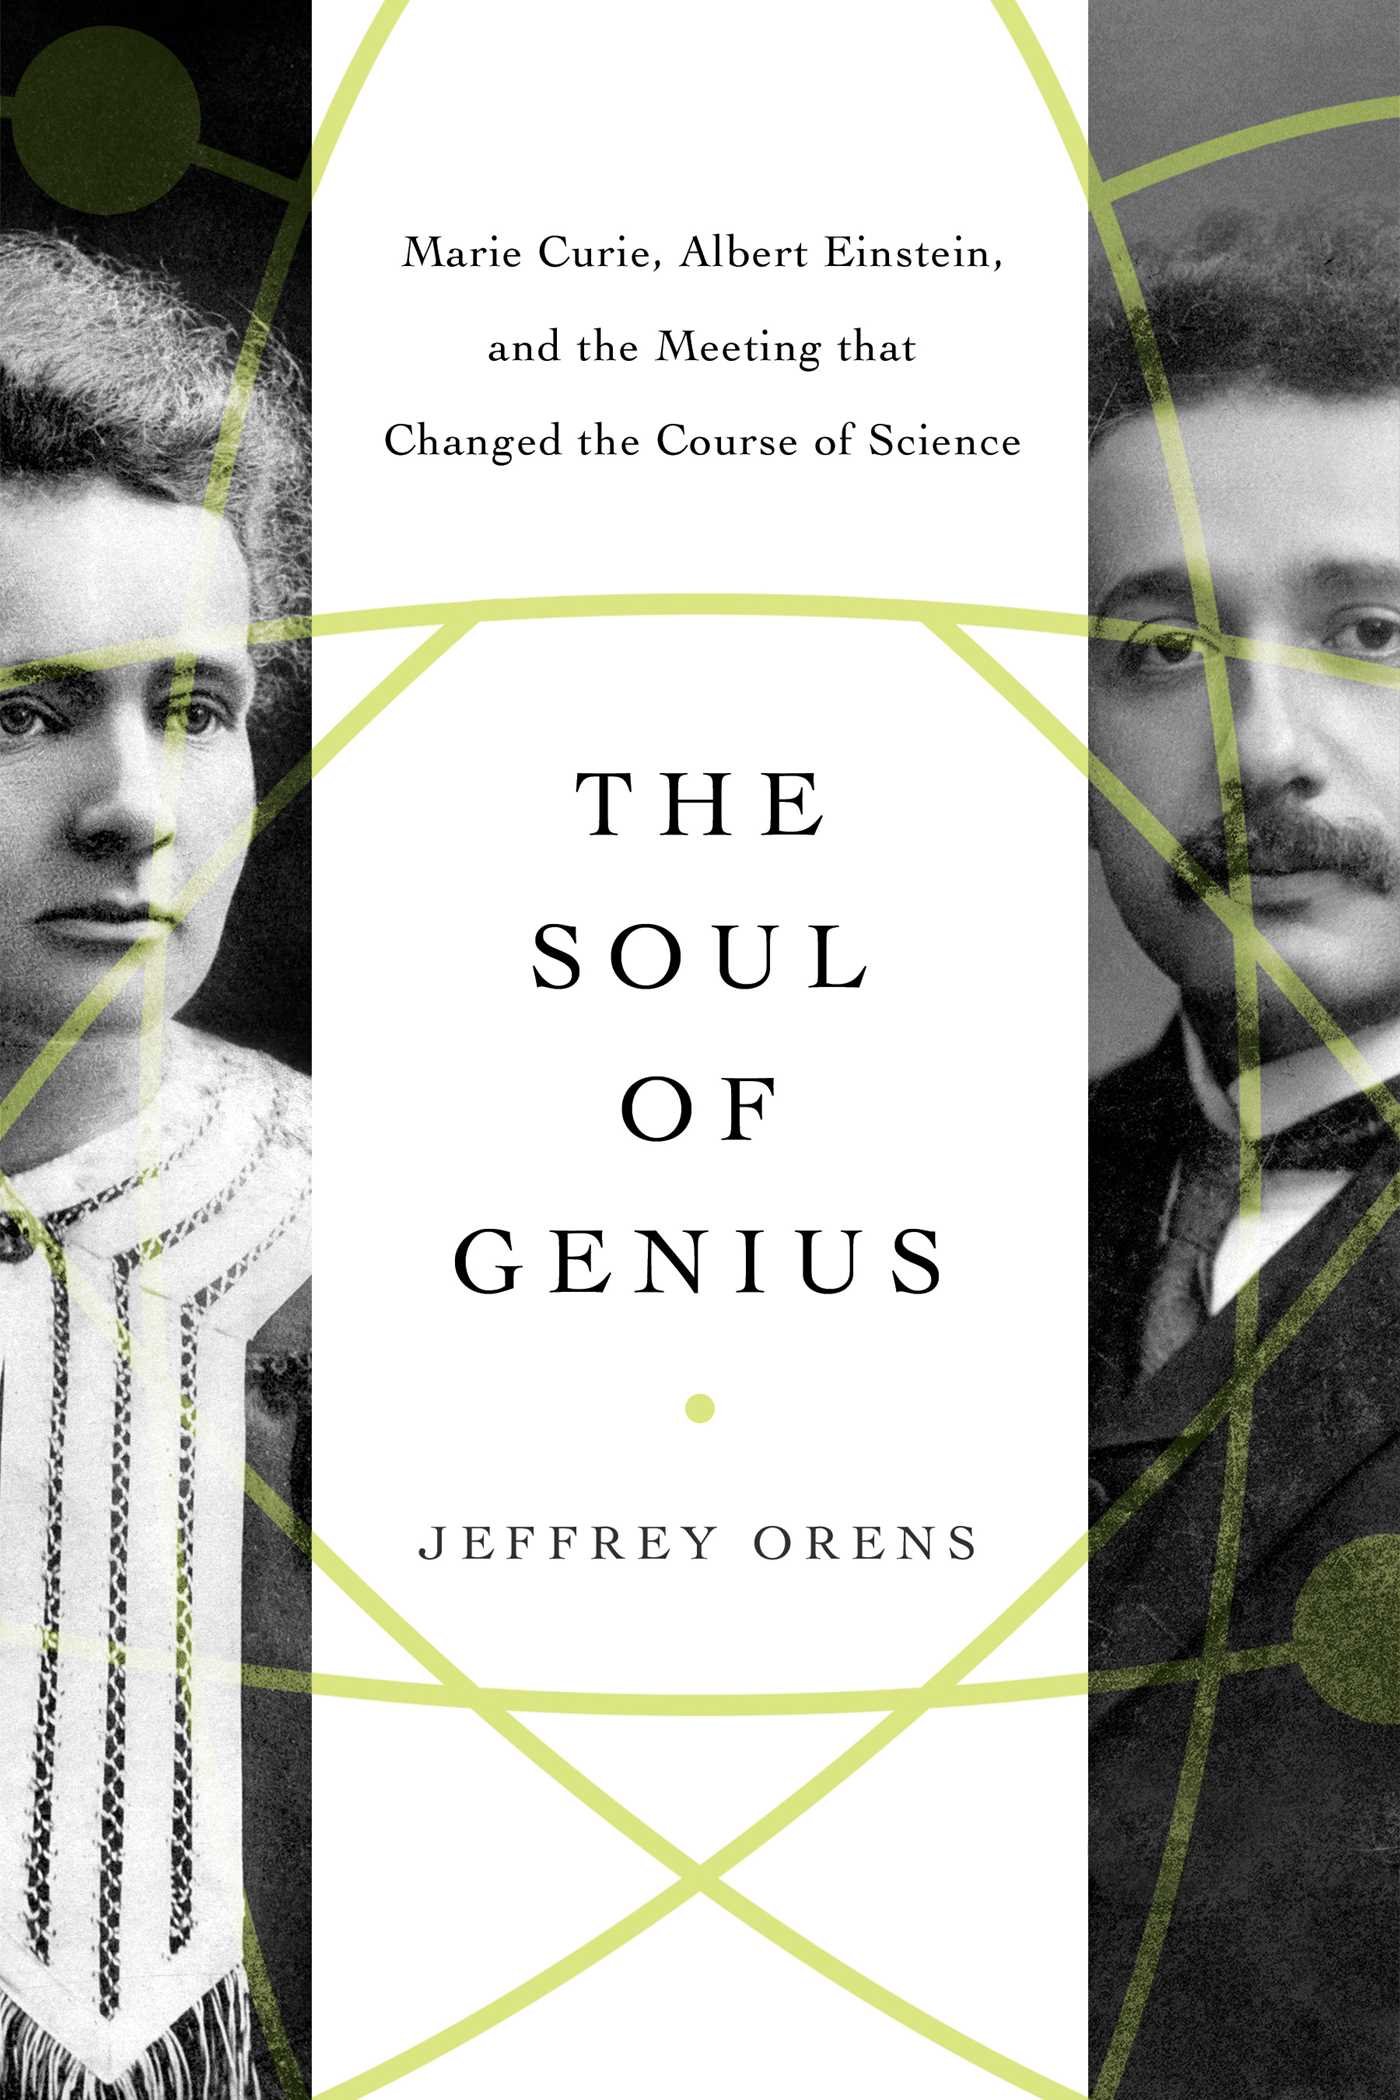 The Soul of Genius by Jeffrey Orens